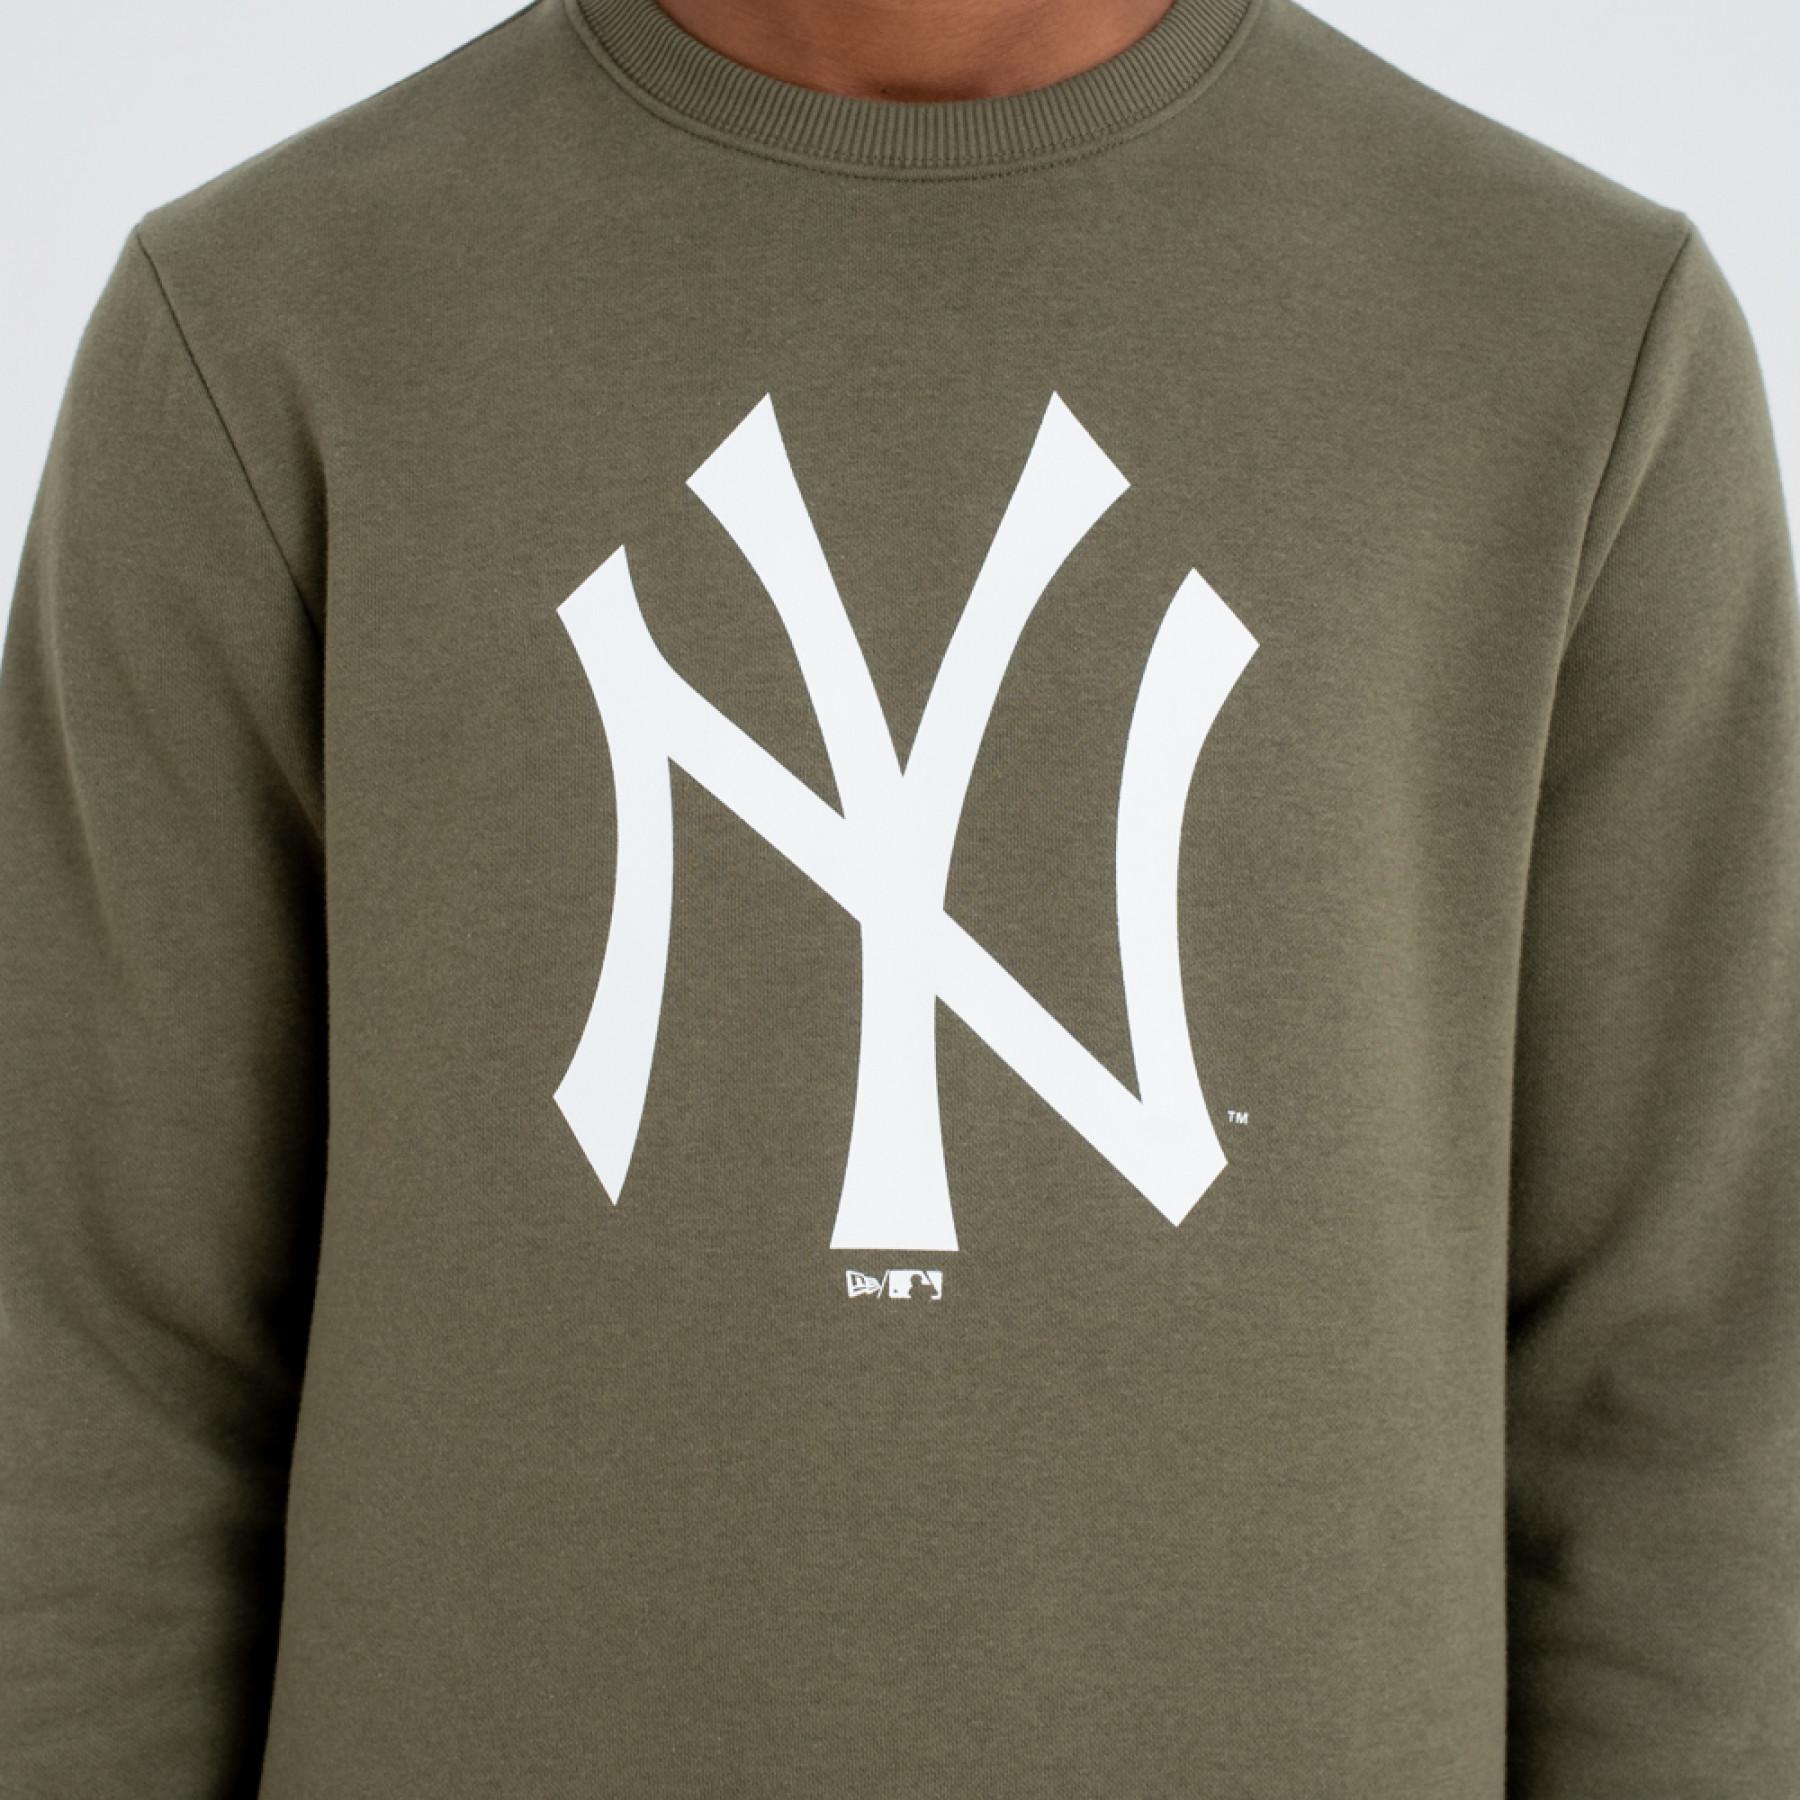 Sweat New Era New York Yankees Crew Neck